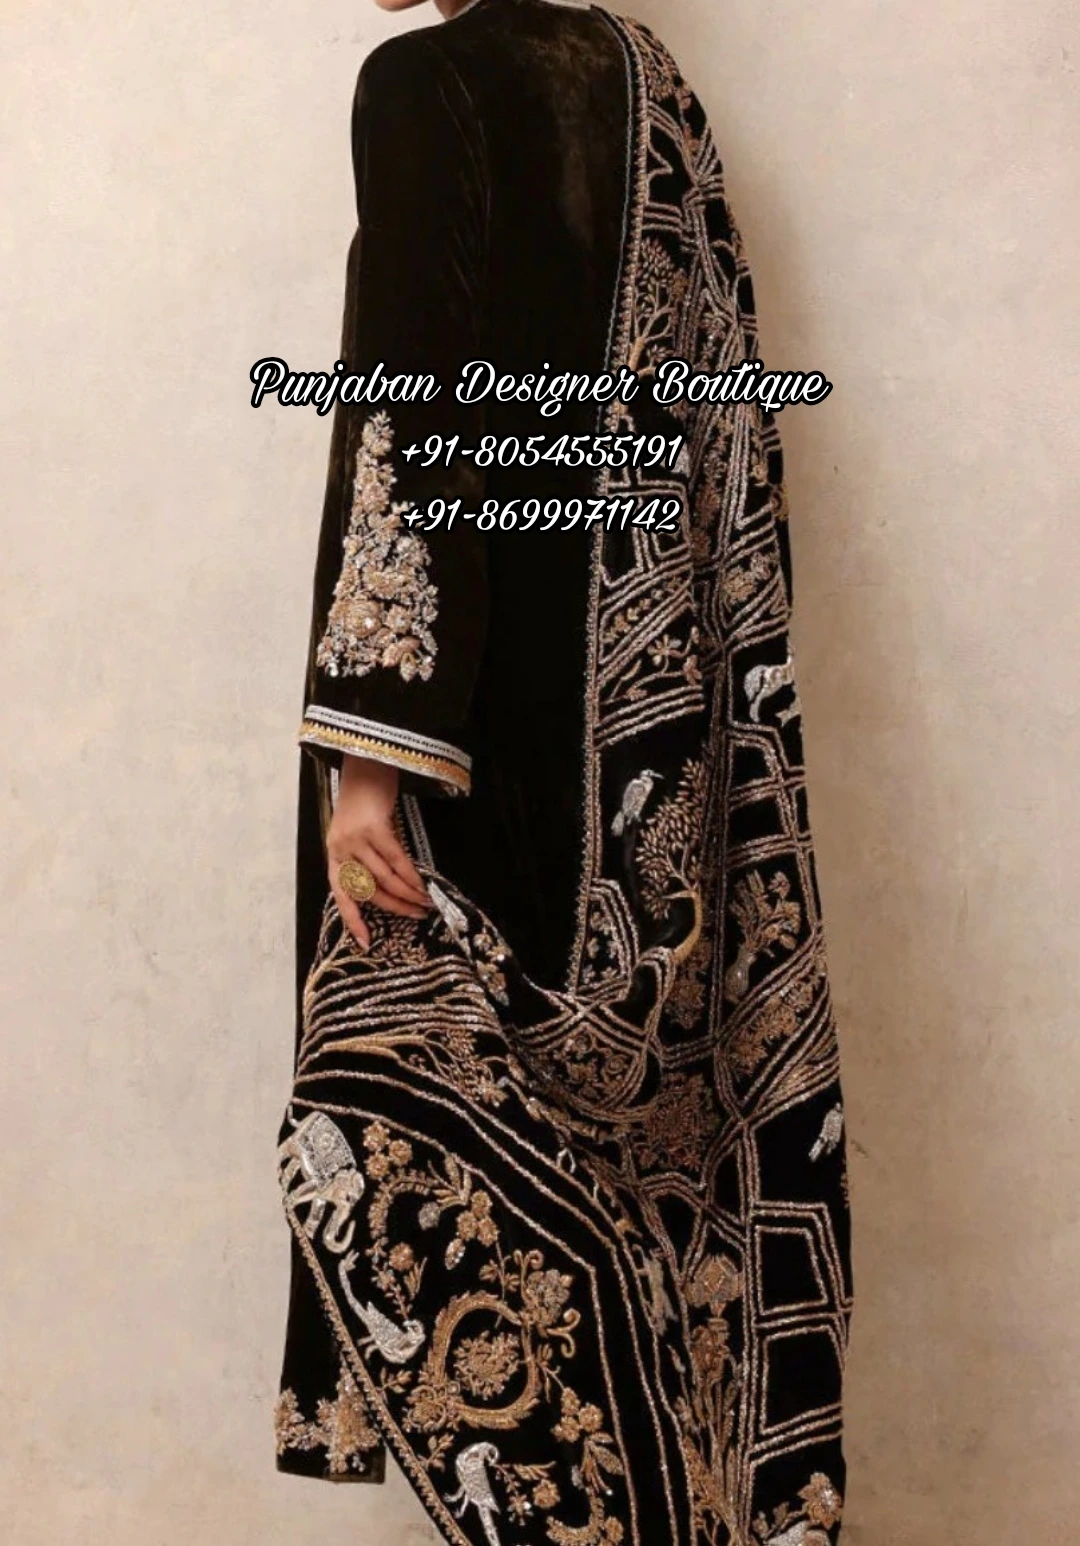 Punjabi Suit Simple Design | Punjaban Designer Boutique